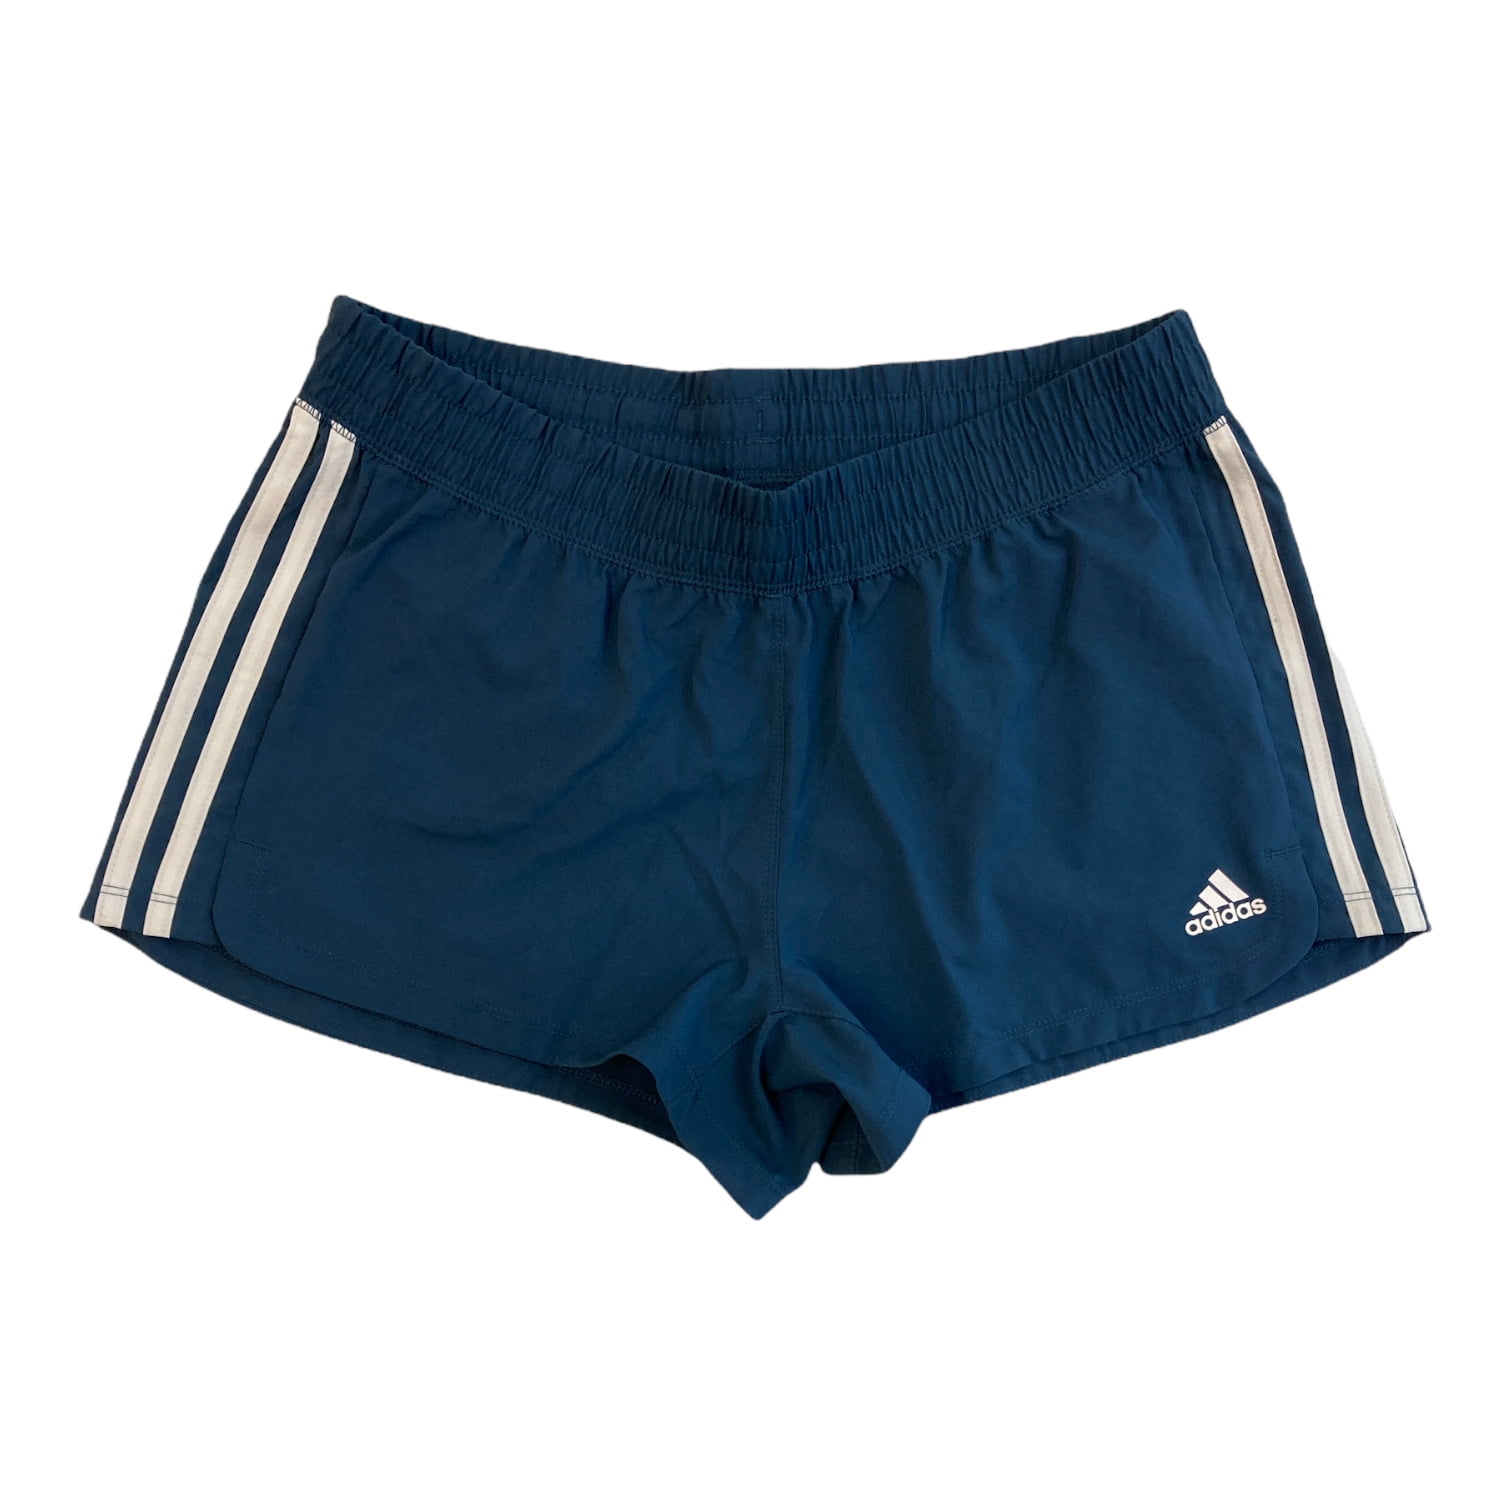 Adidas Womens Track Pants Shorts Blue Black Size Large Lot 2 - Shop Linda's  Stuff